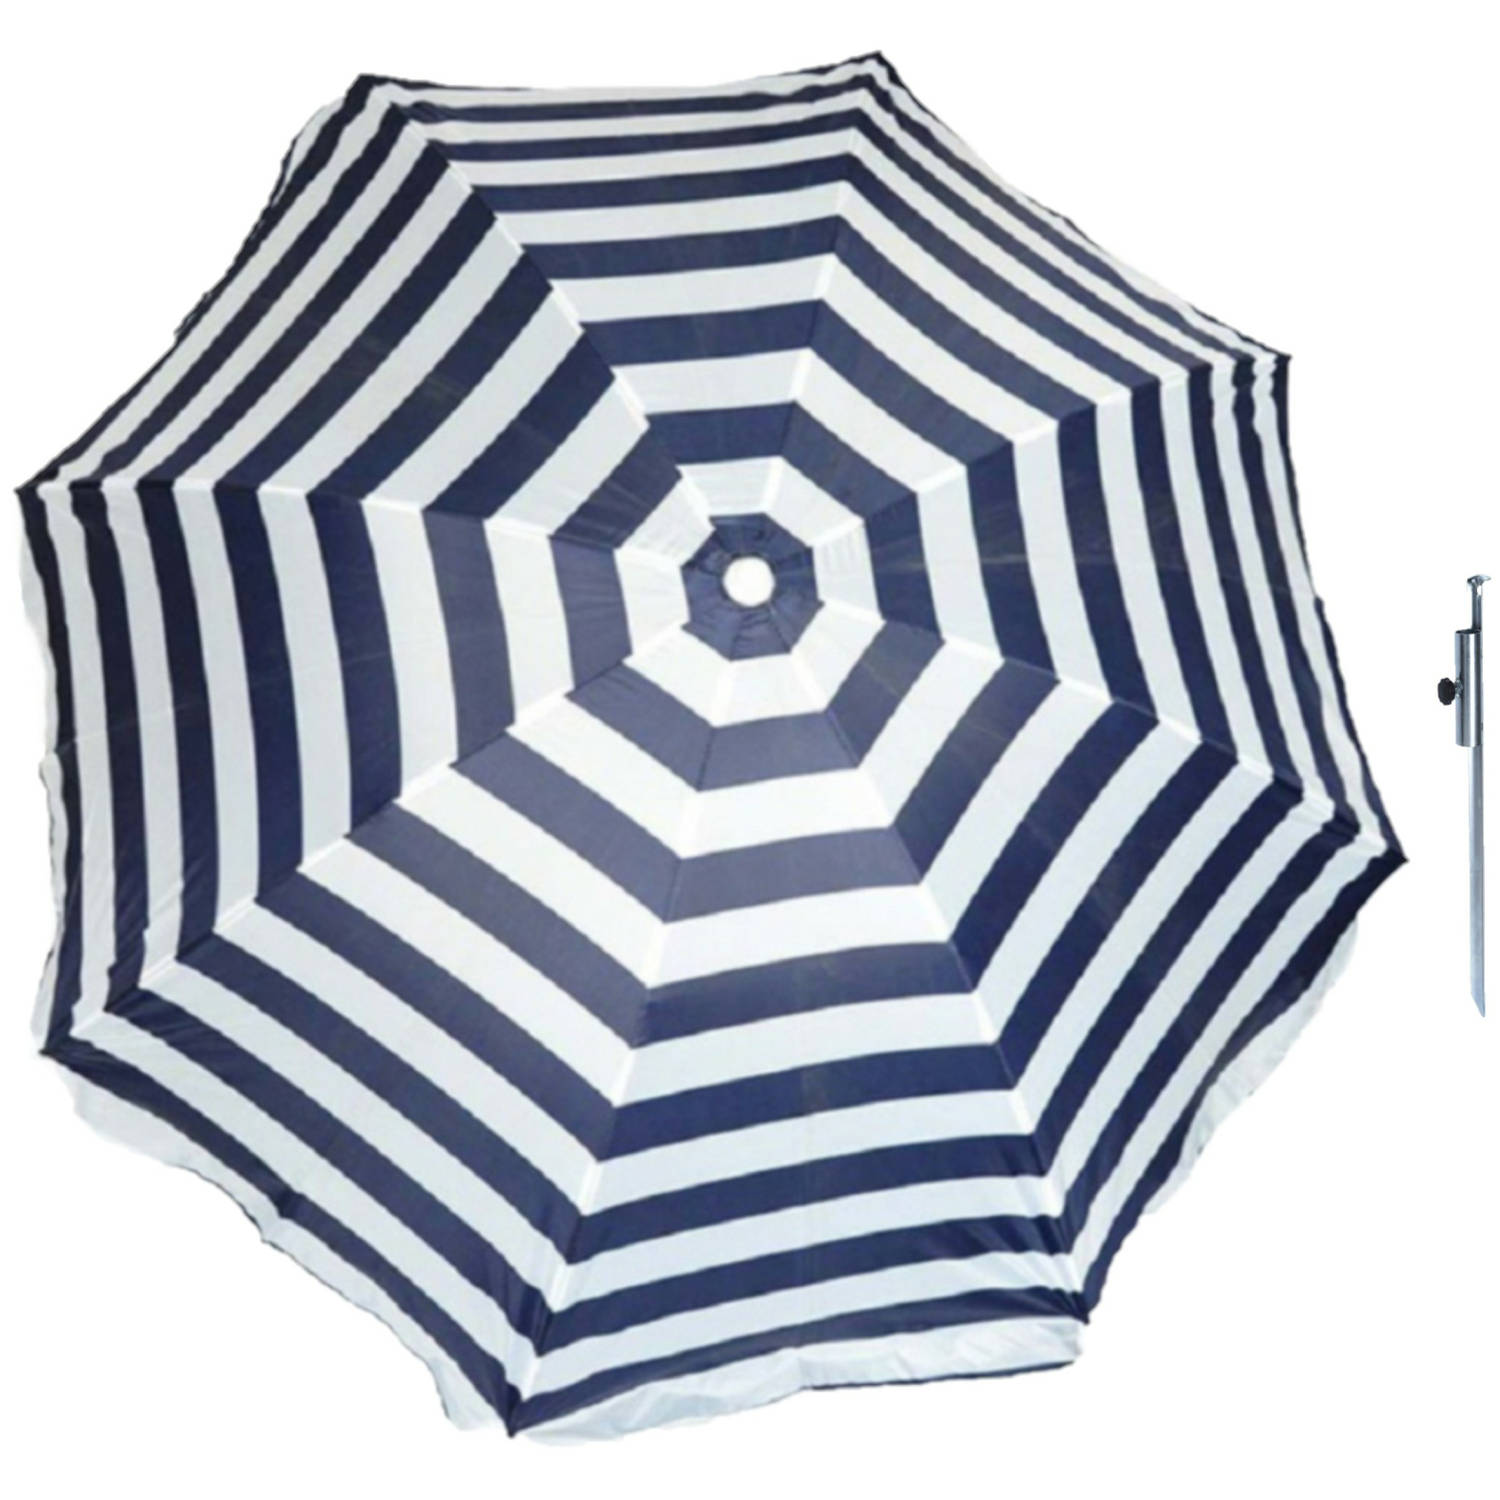 Parasol Blauw-wit D180 cm incl. draagtas parasolharing 49 cm Parasols